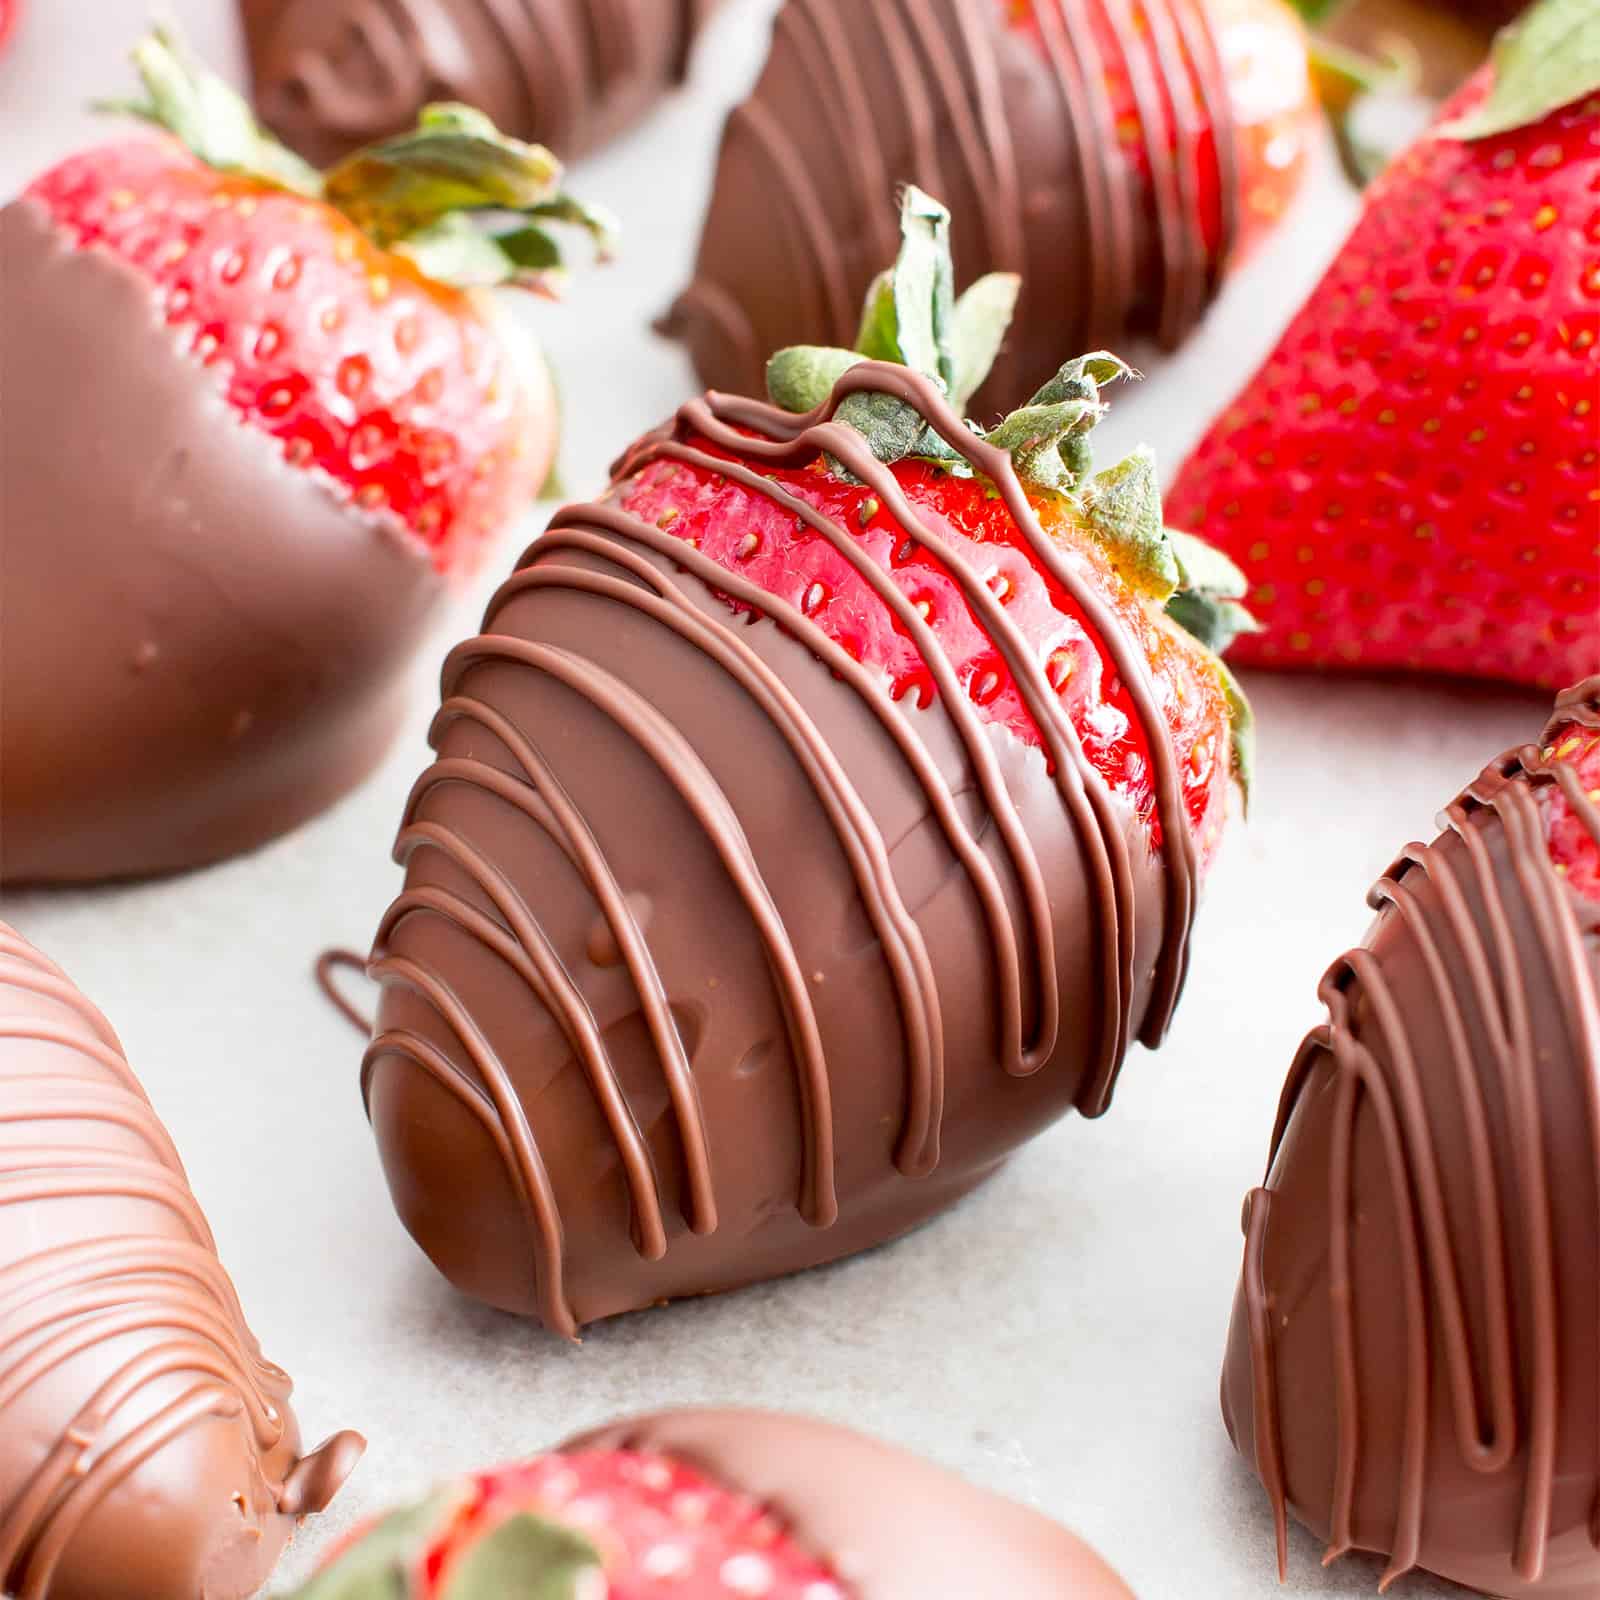 How to Make Chocolate Dipped Strawberries Recipe (Vegan, Paleo, 2 Ingredient, Gluten Free, Dairy-Free) + VIDEO